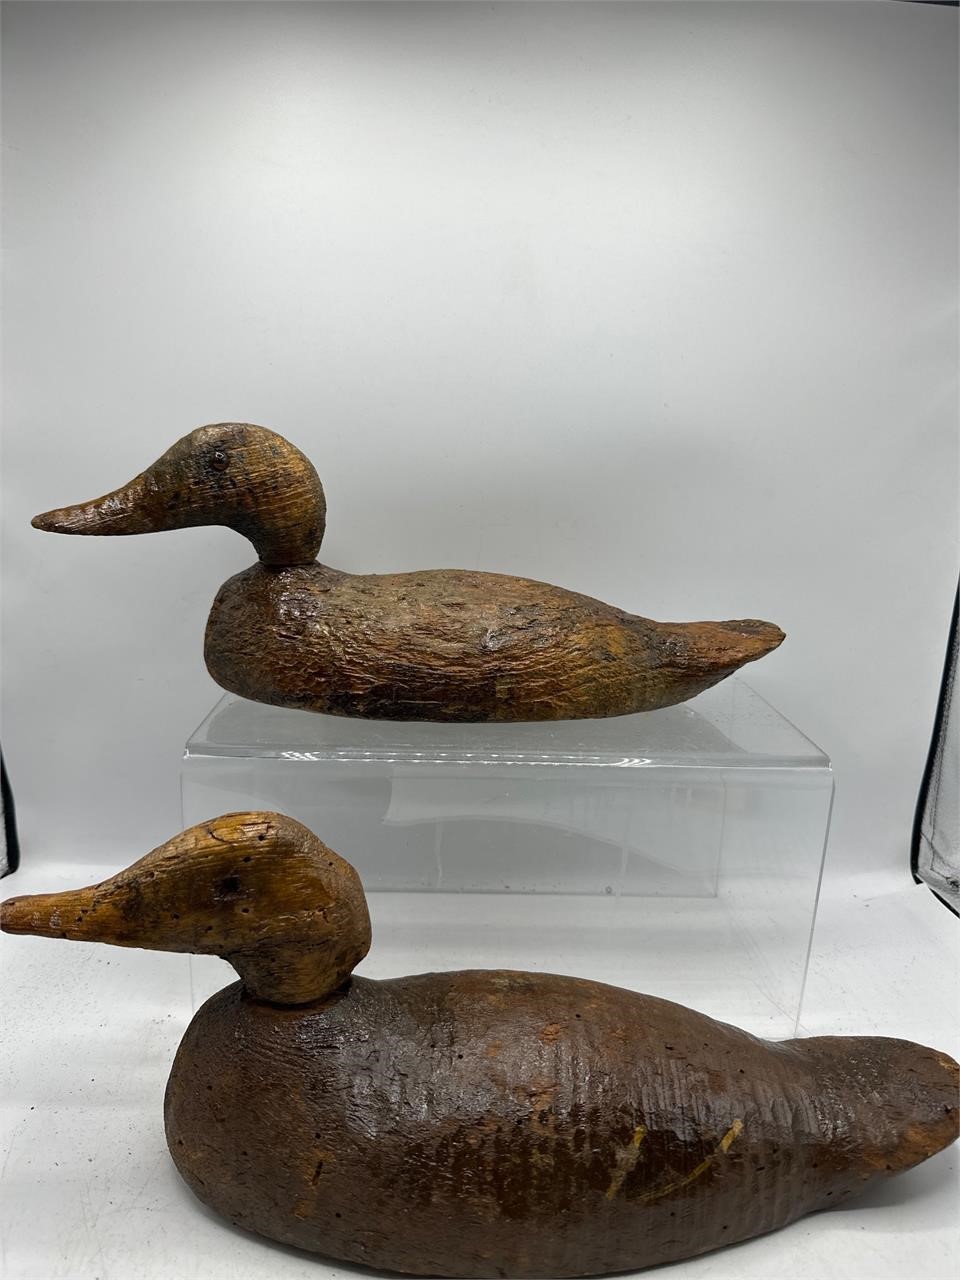 2 Antique wood duck decoys